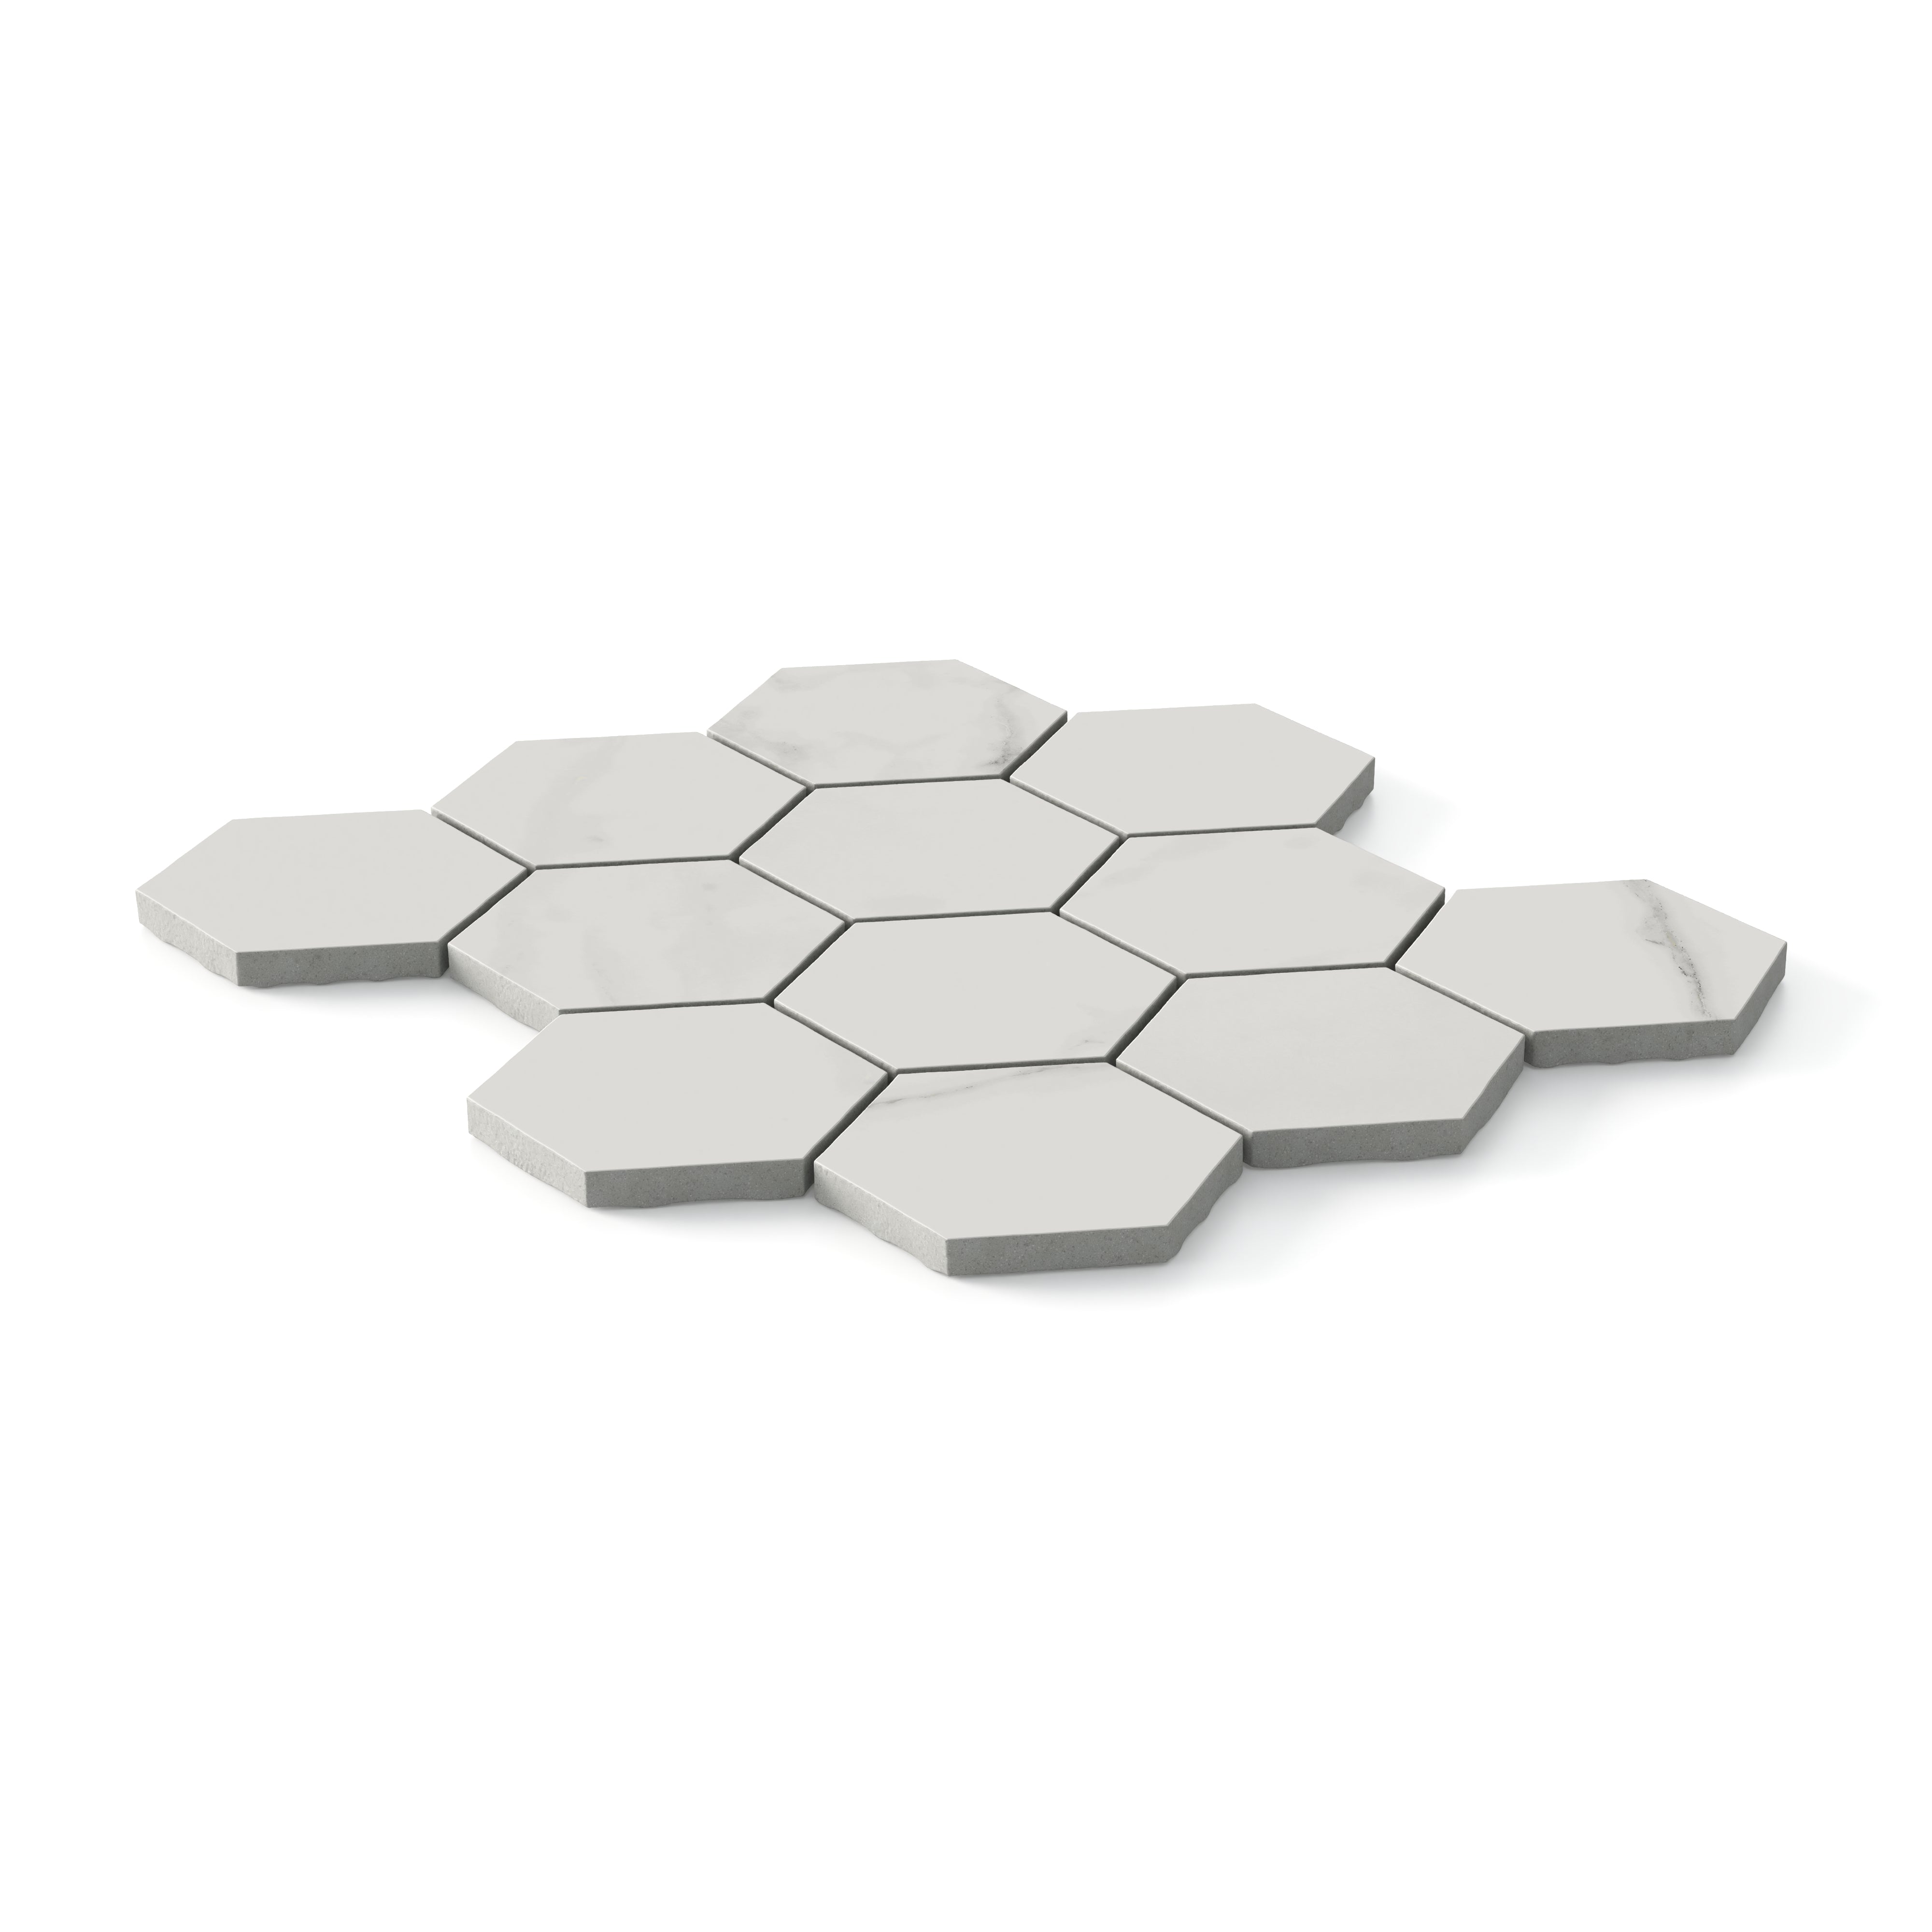 Leona 3x3 Matte Porcelain Hexagon Mosaic Tile in Calacatta